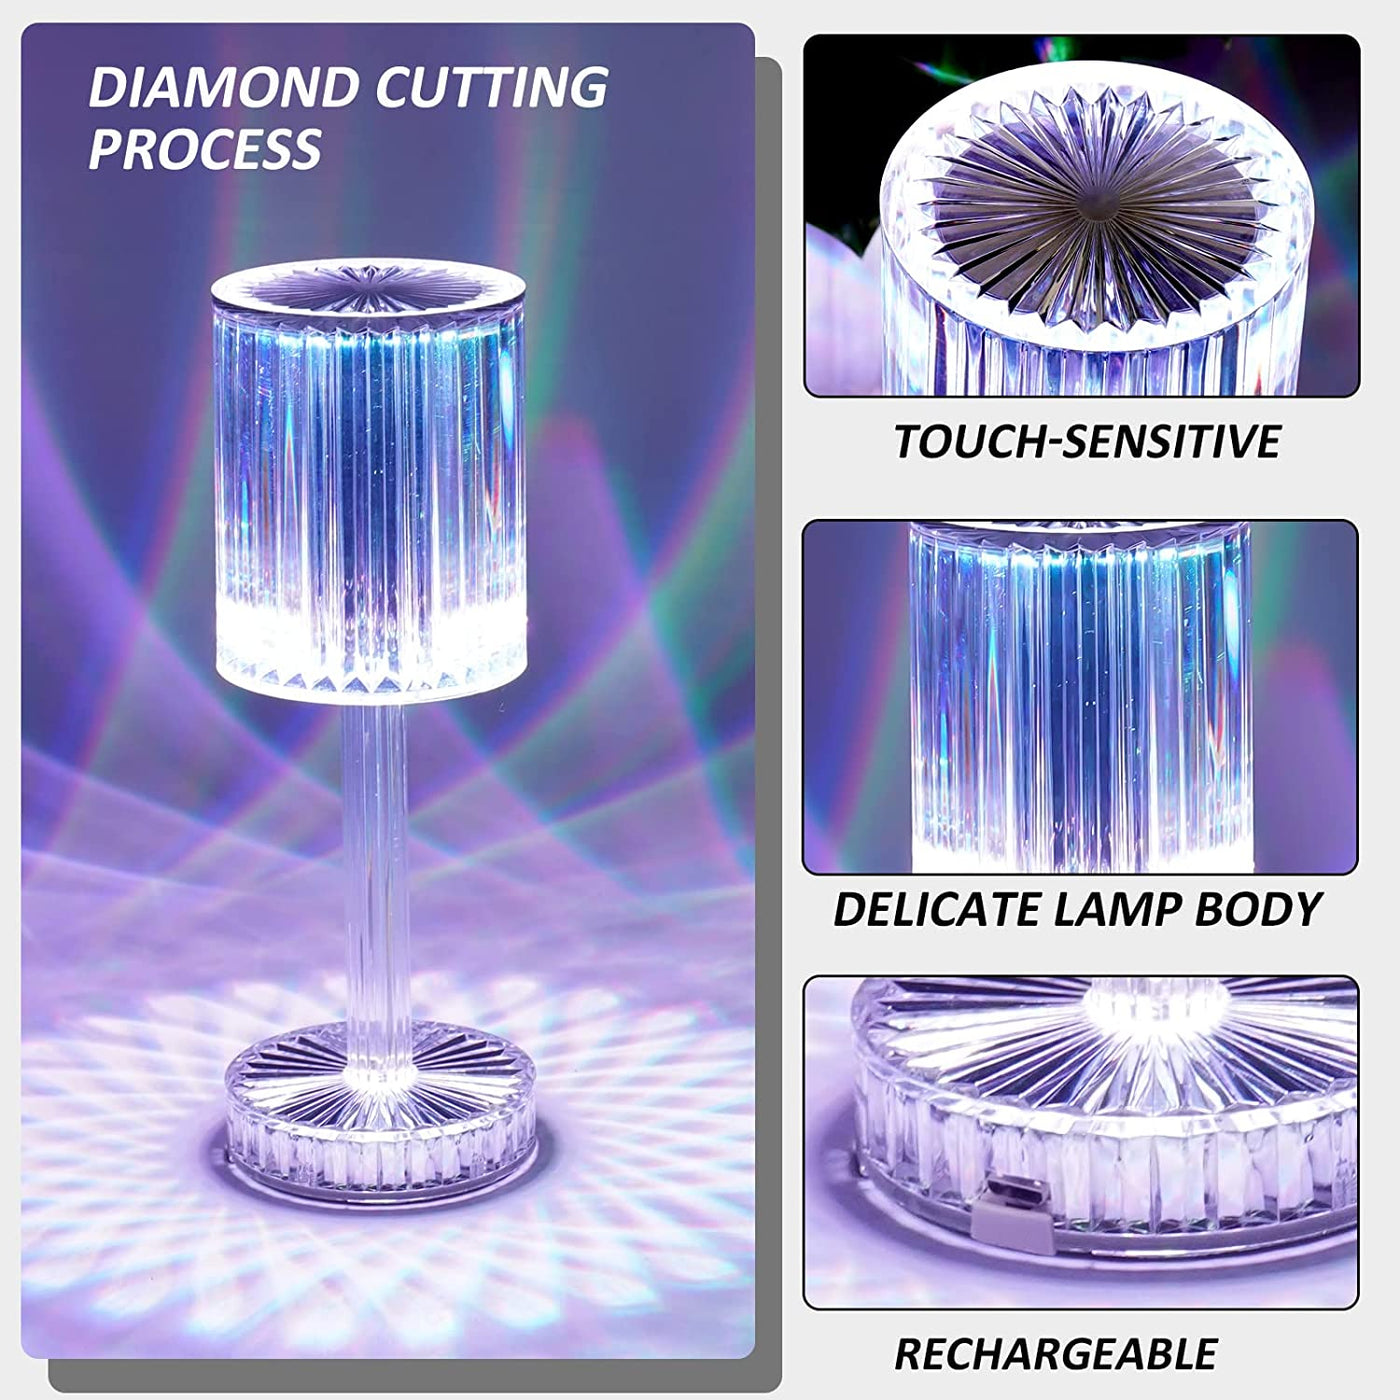 Diamond Table Lamp